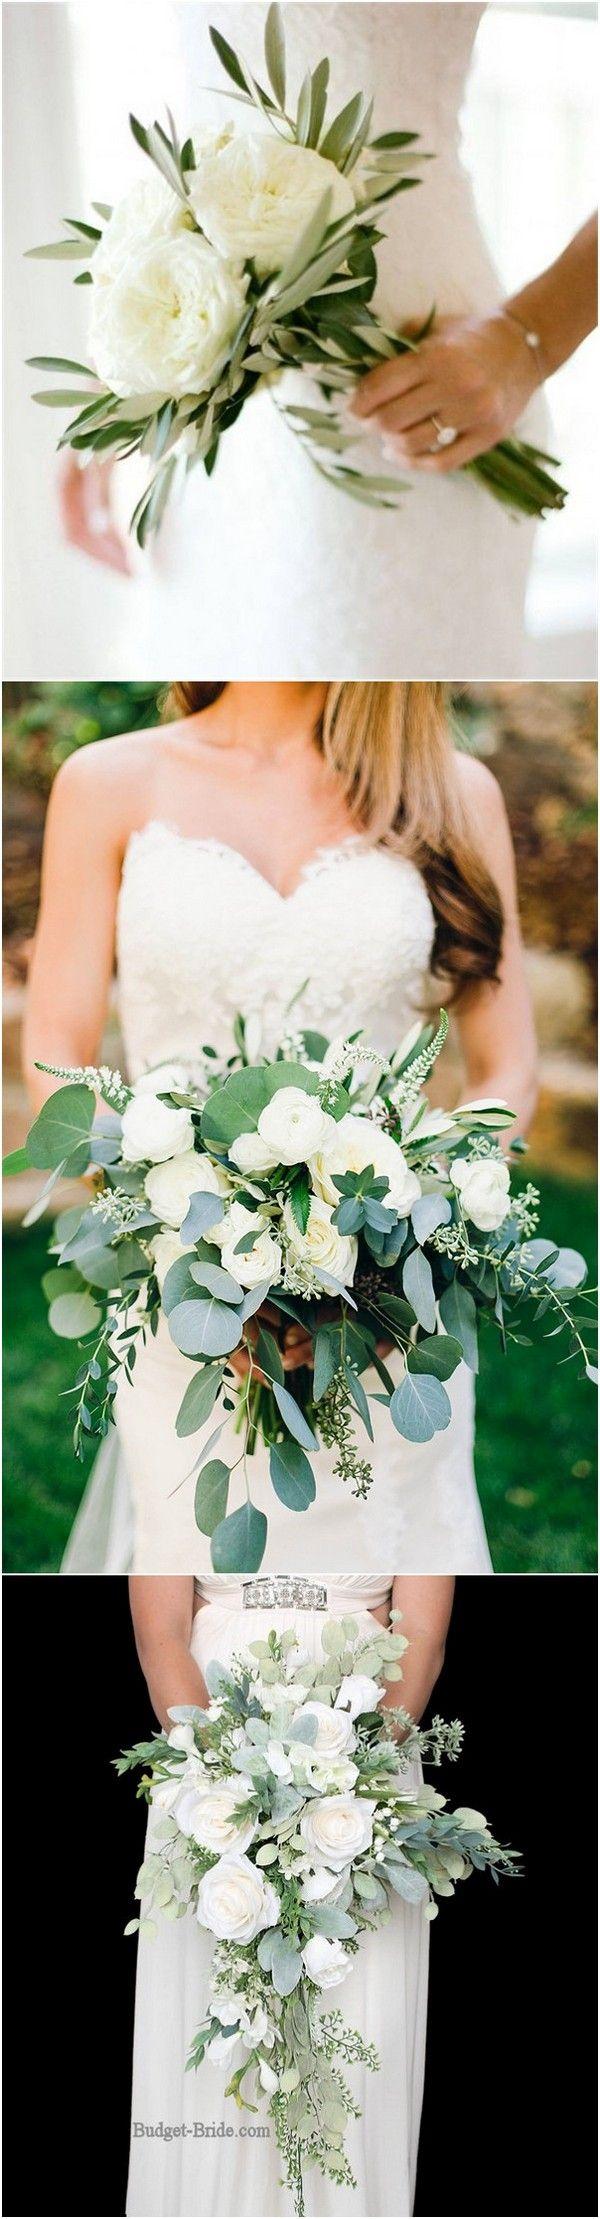 زفاف - Top 10 White And Green Wedding Bouquet Ideas You’ll Love - Page 2 Of 2